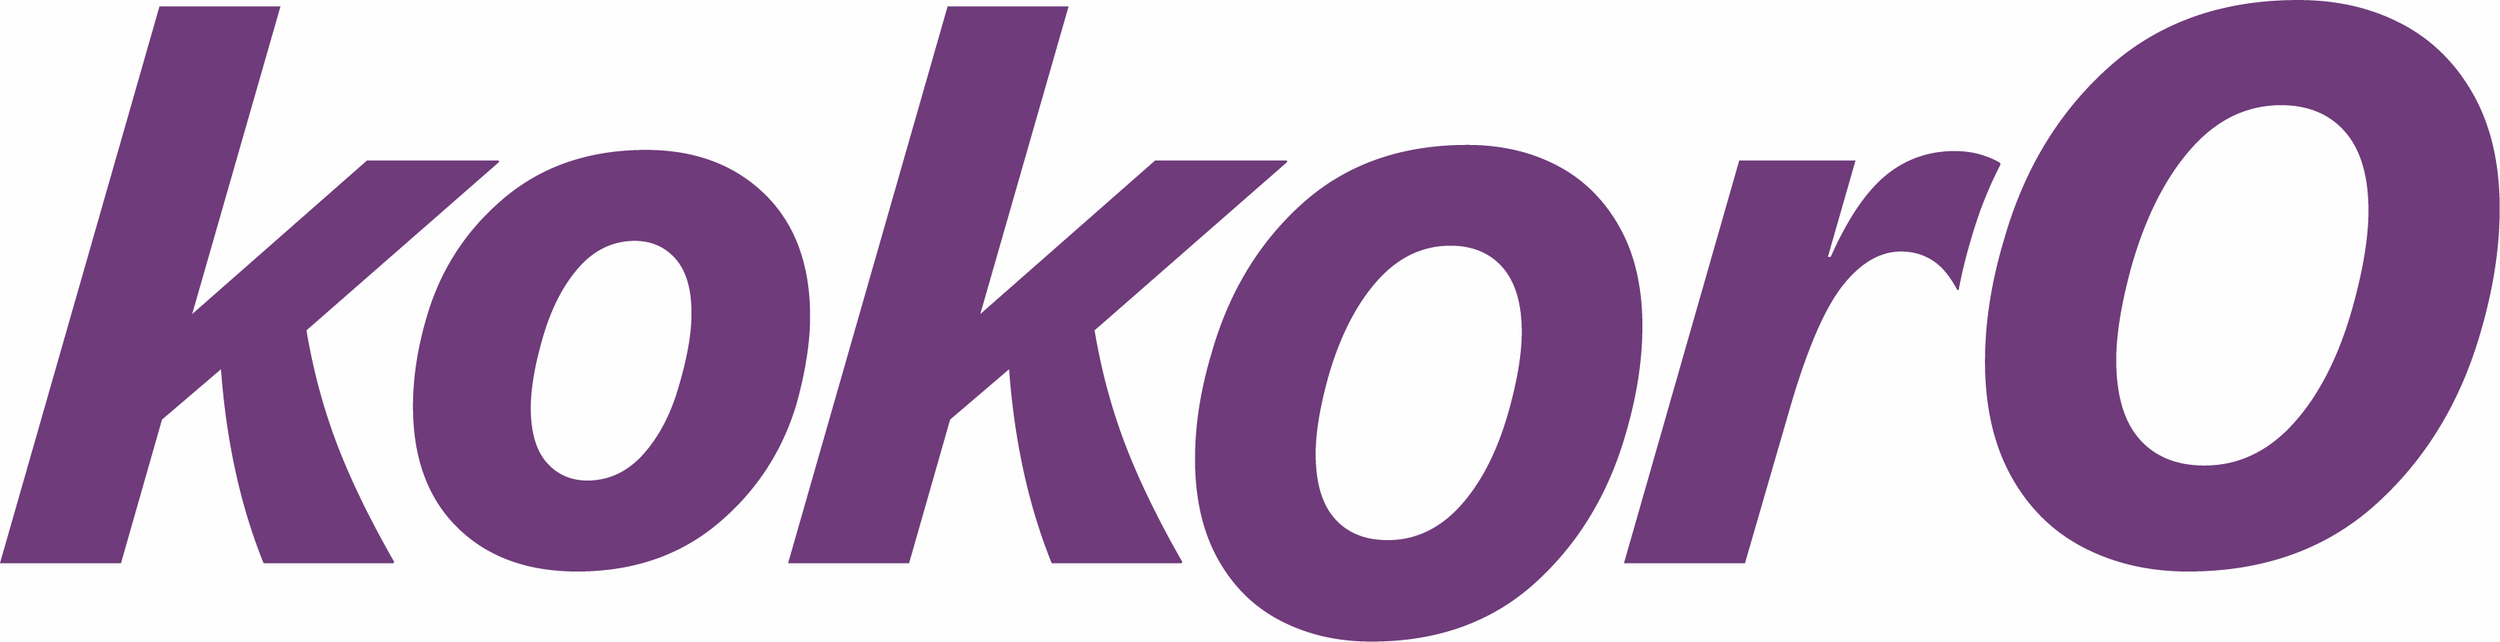 kokoro logo.jpg